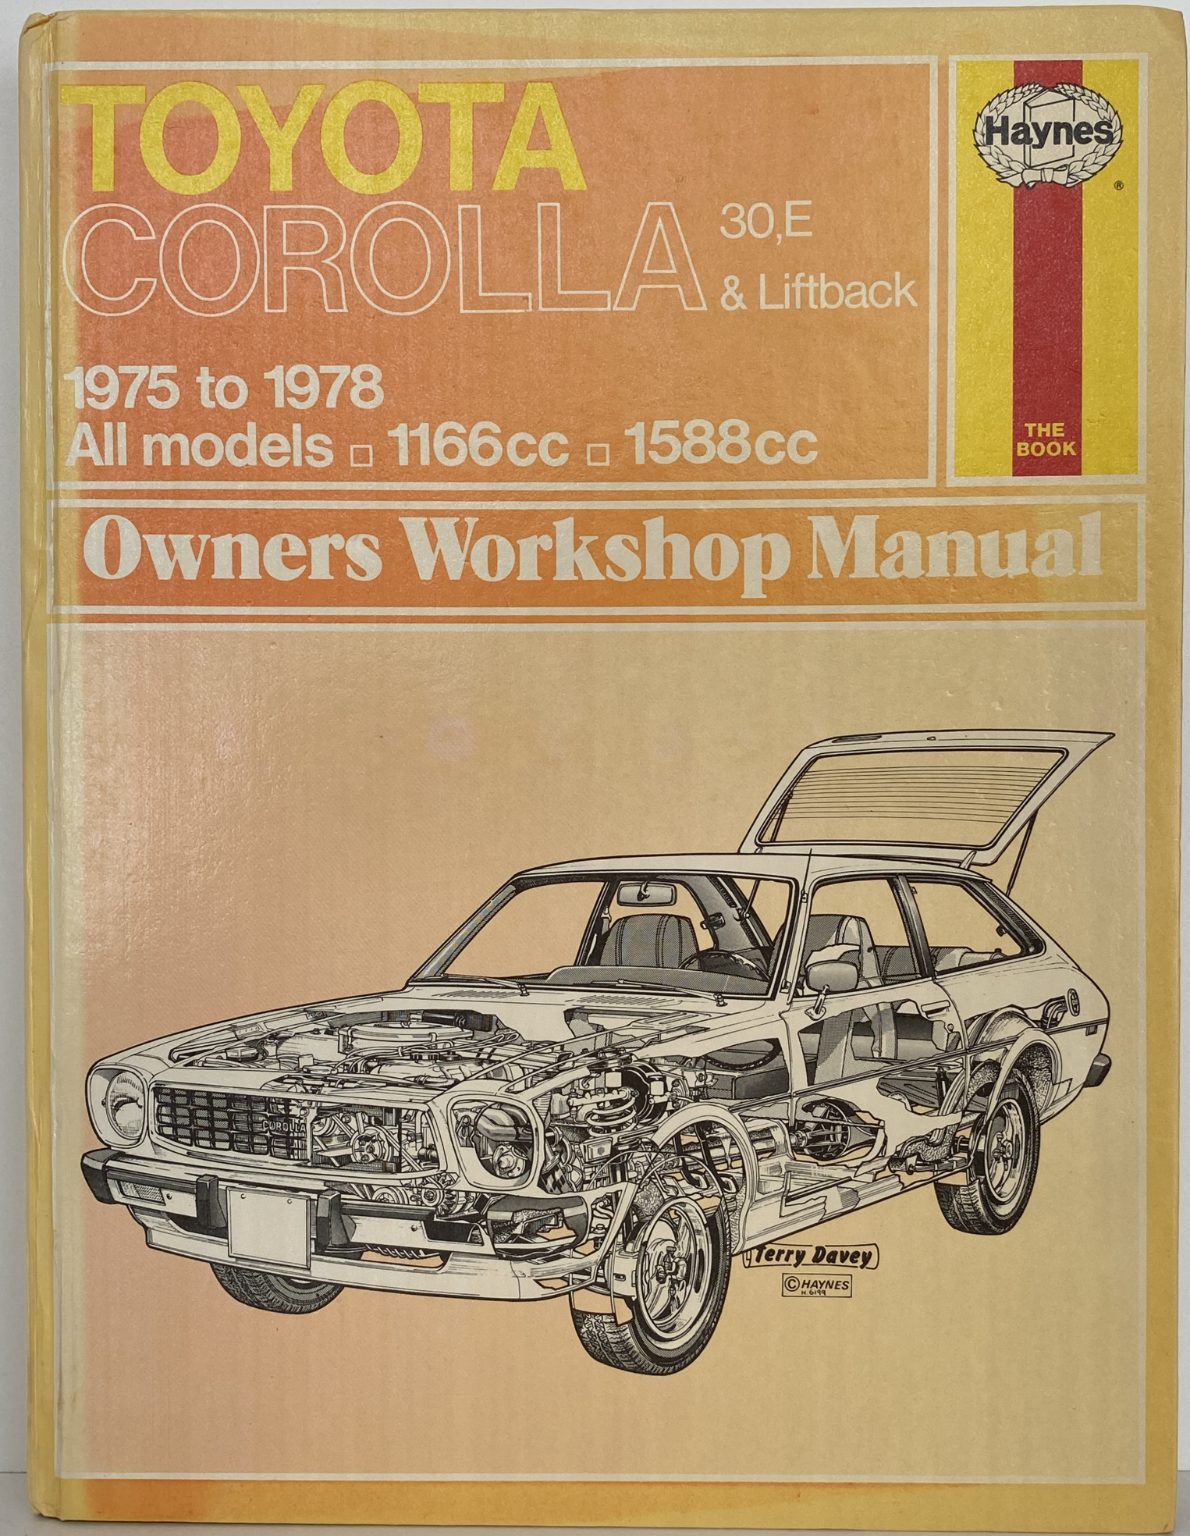 TOYOTA COROLLA 30E & Liftback 1975 to 1978 - Owners Workshop Manual